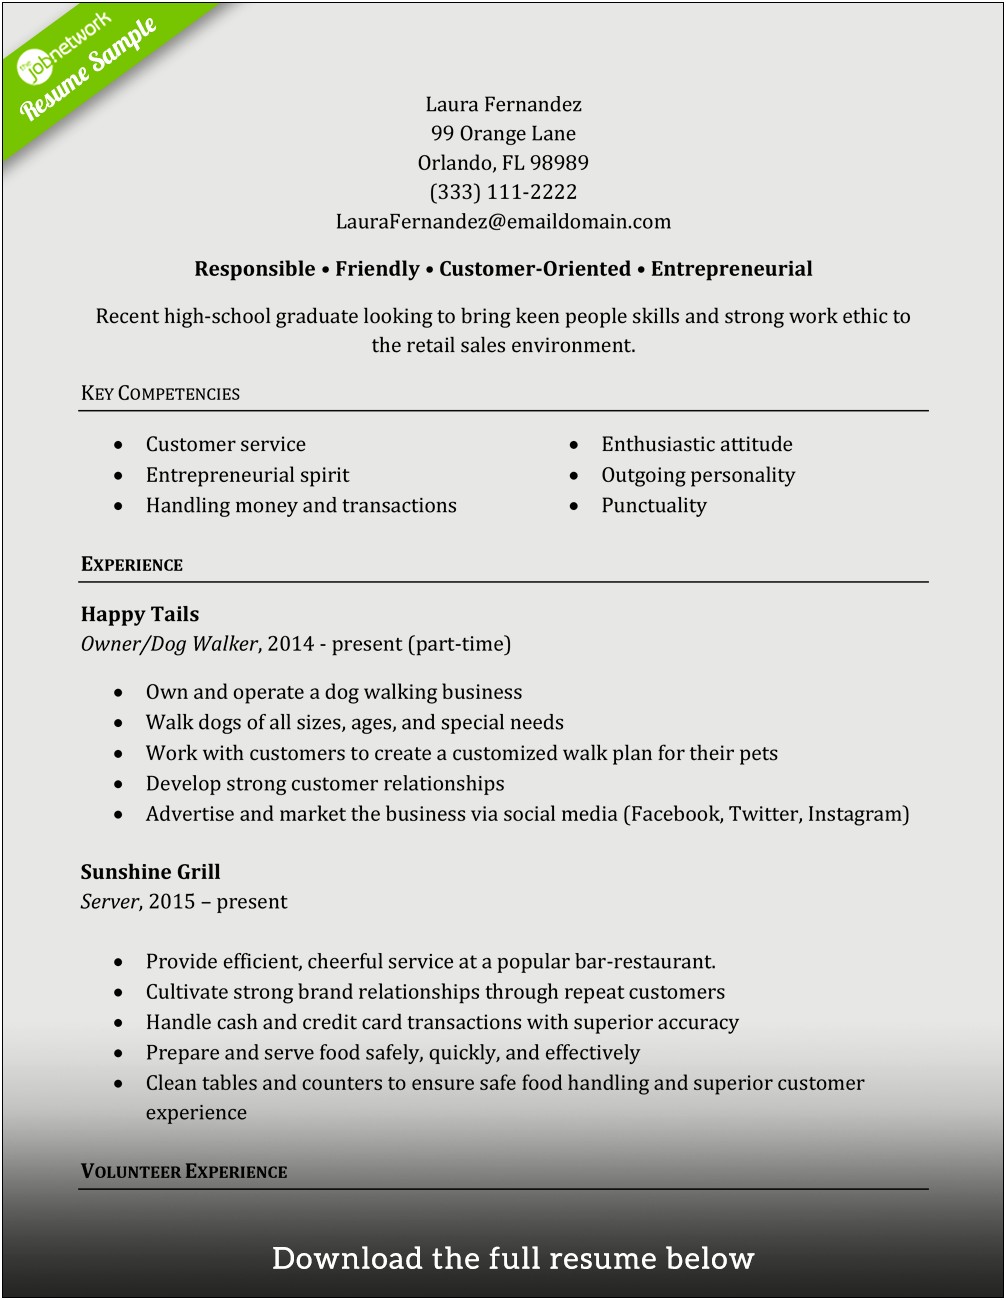 Sample Resume For Sales Associate Job